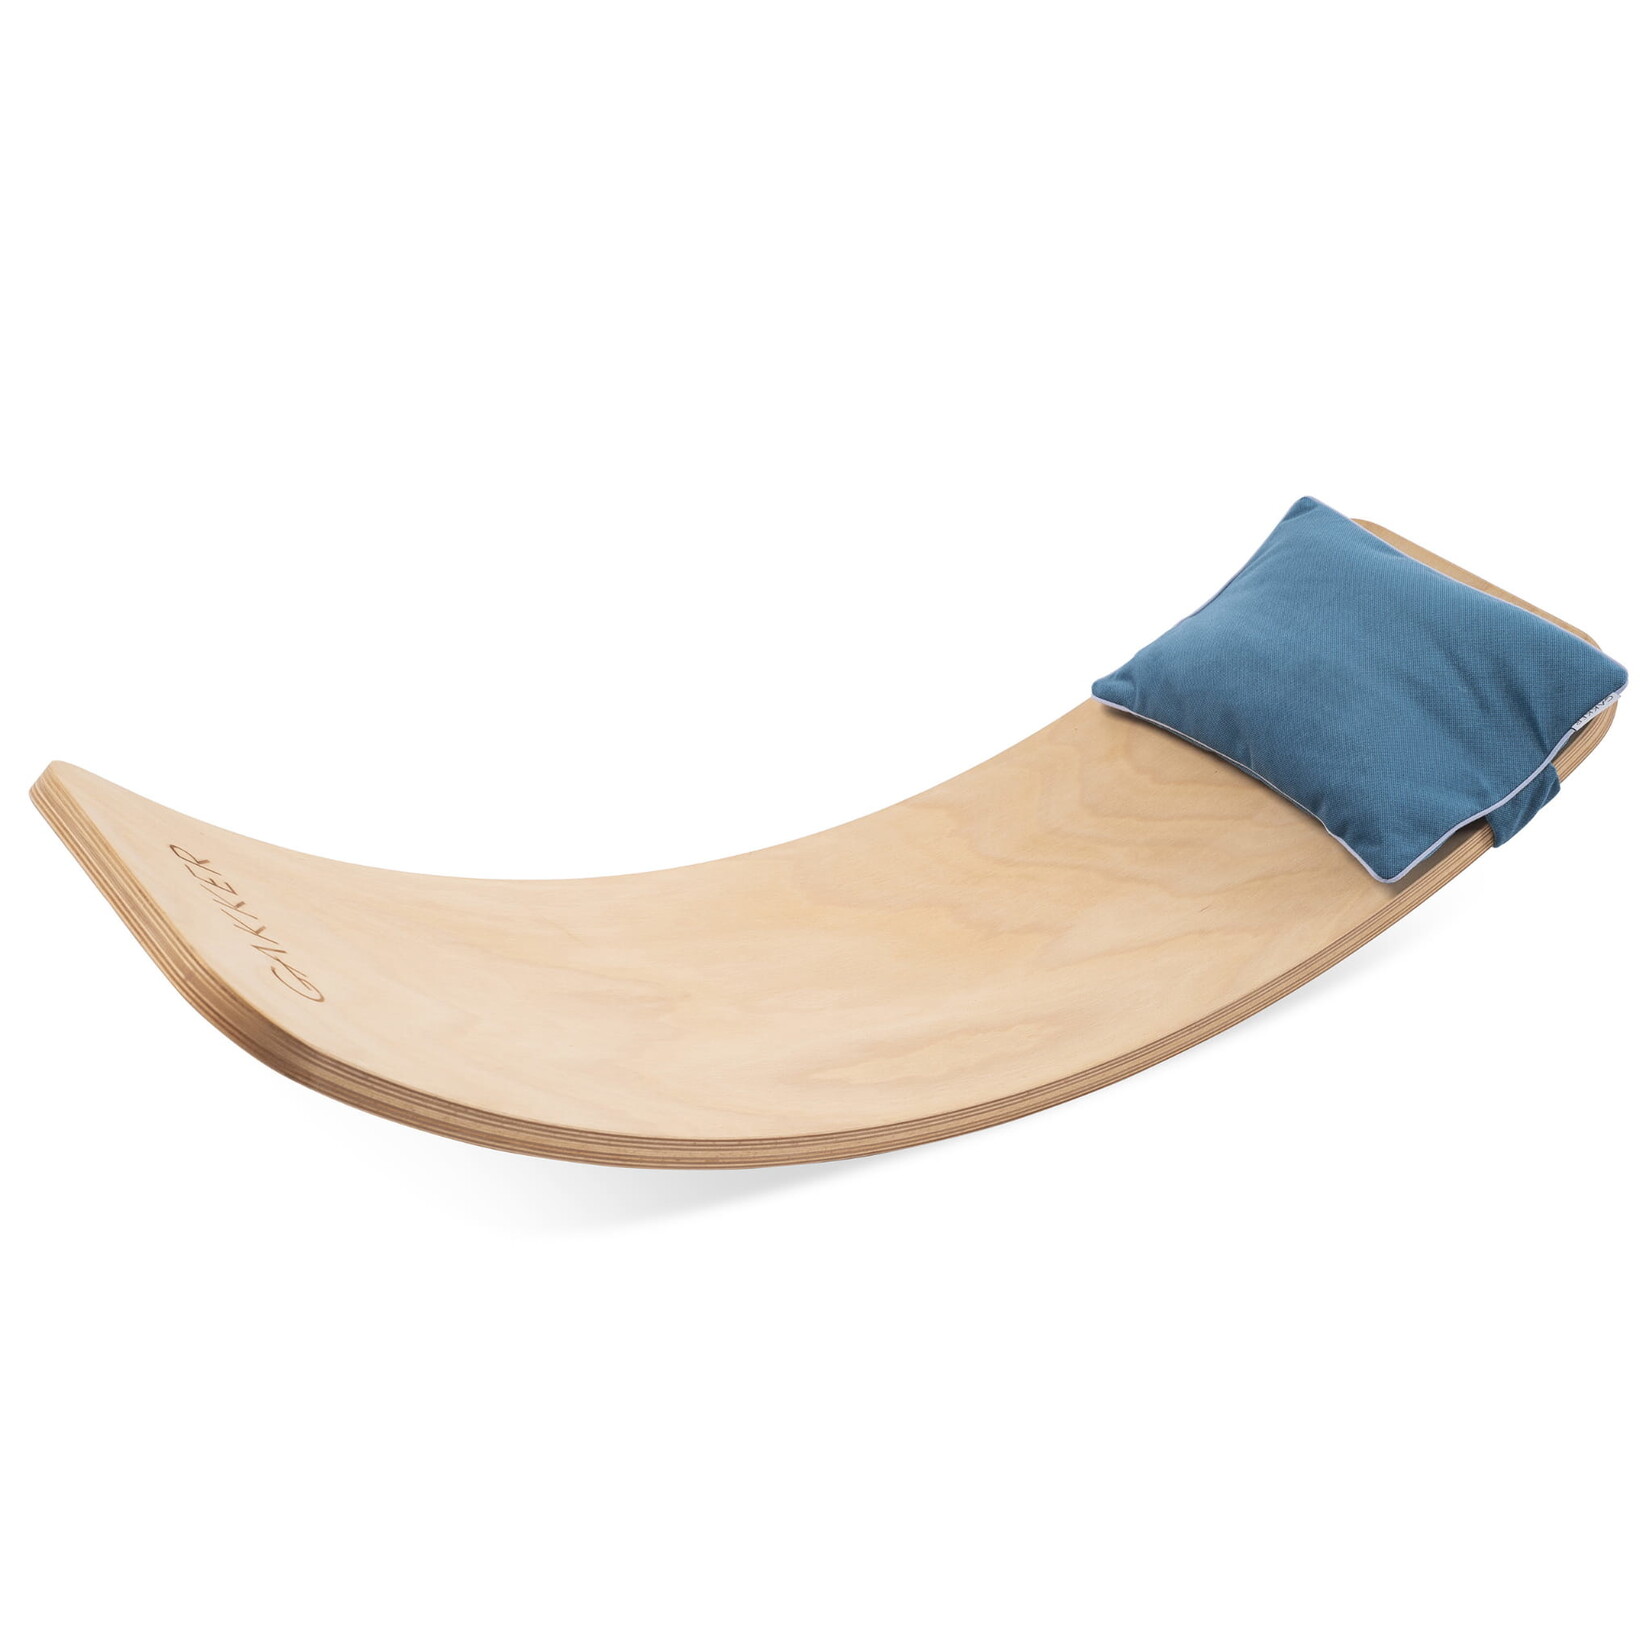 Gakker Balance board Relax Set - Turquoise